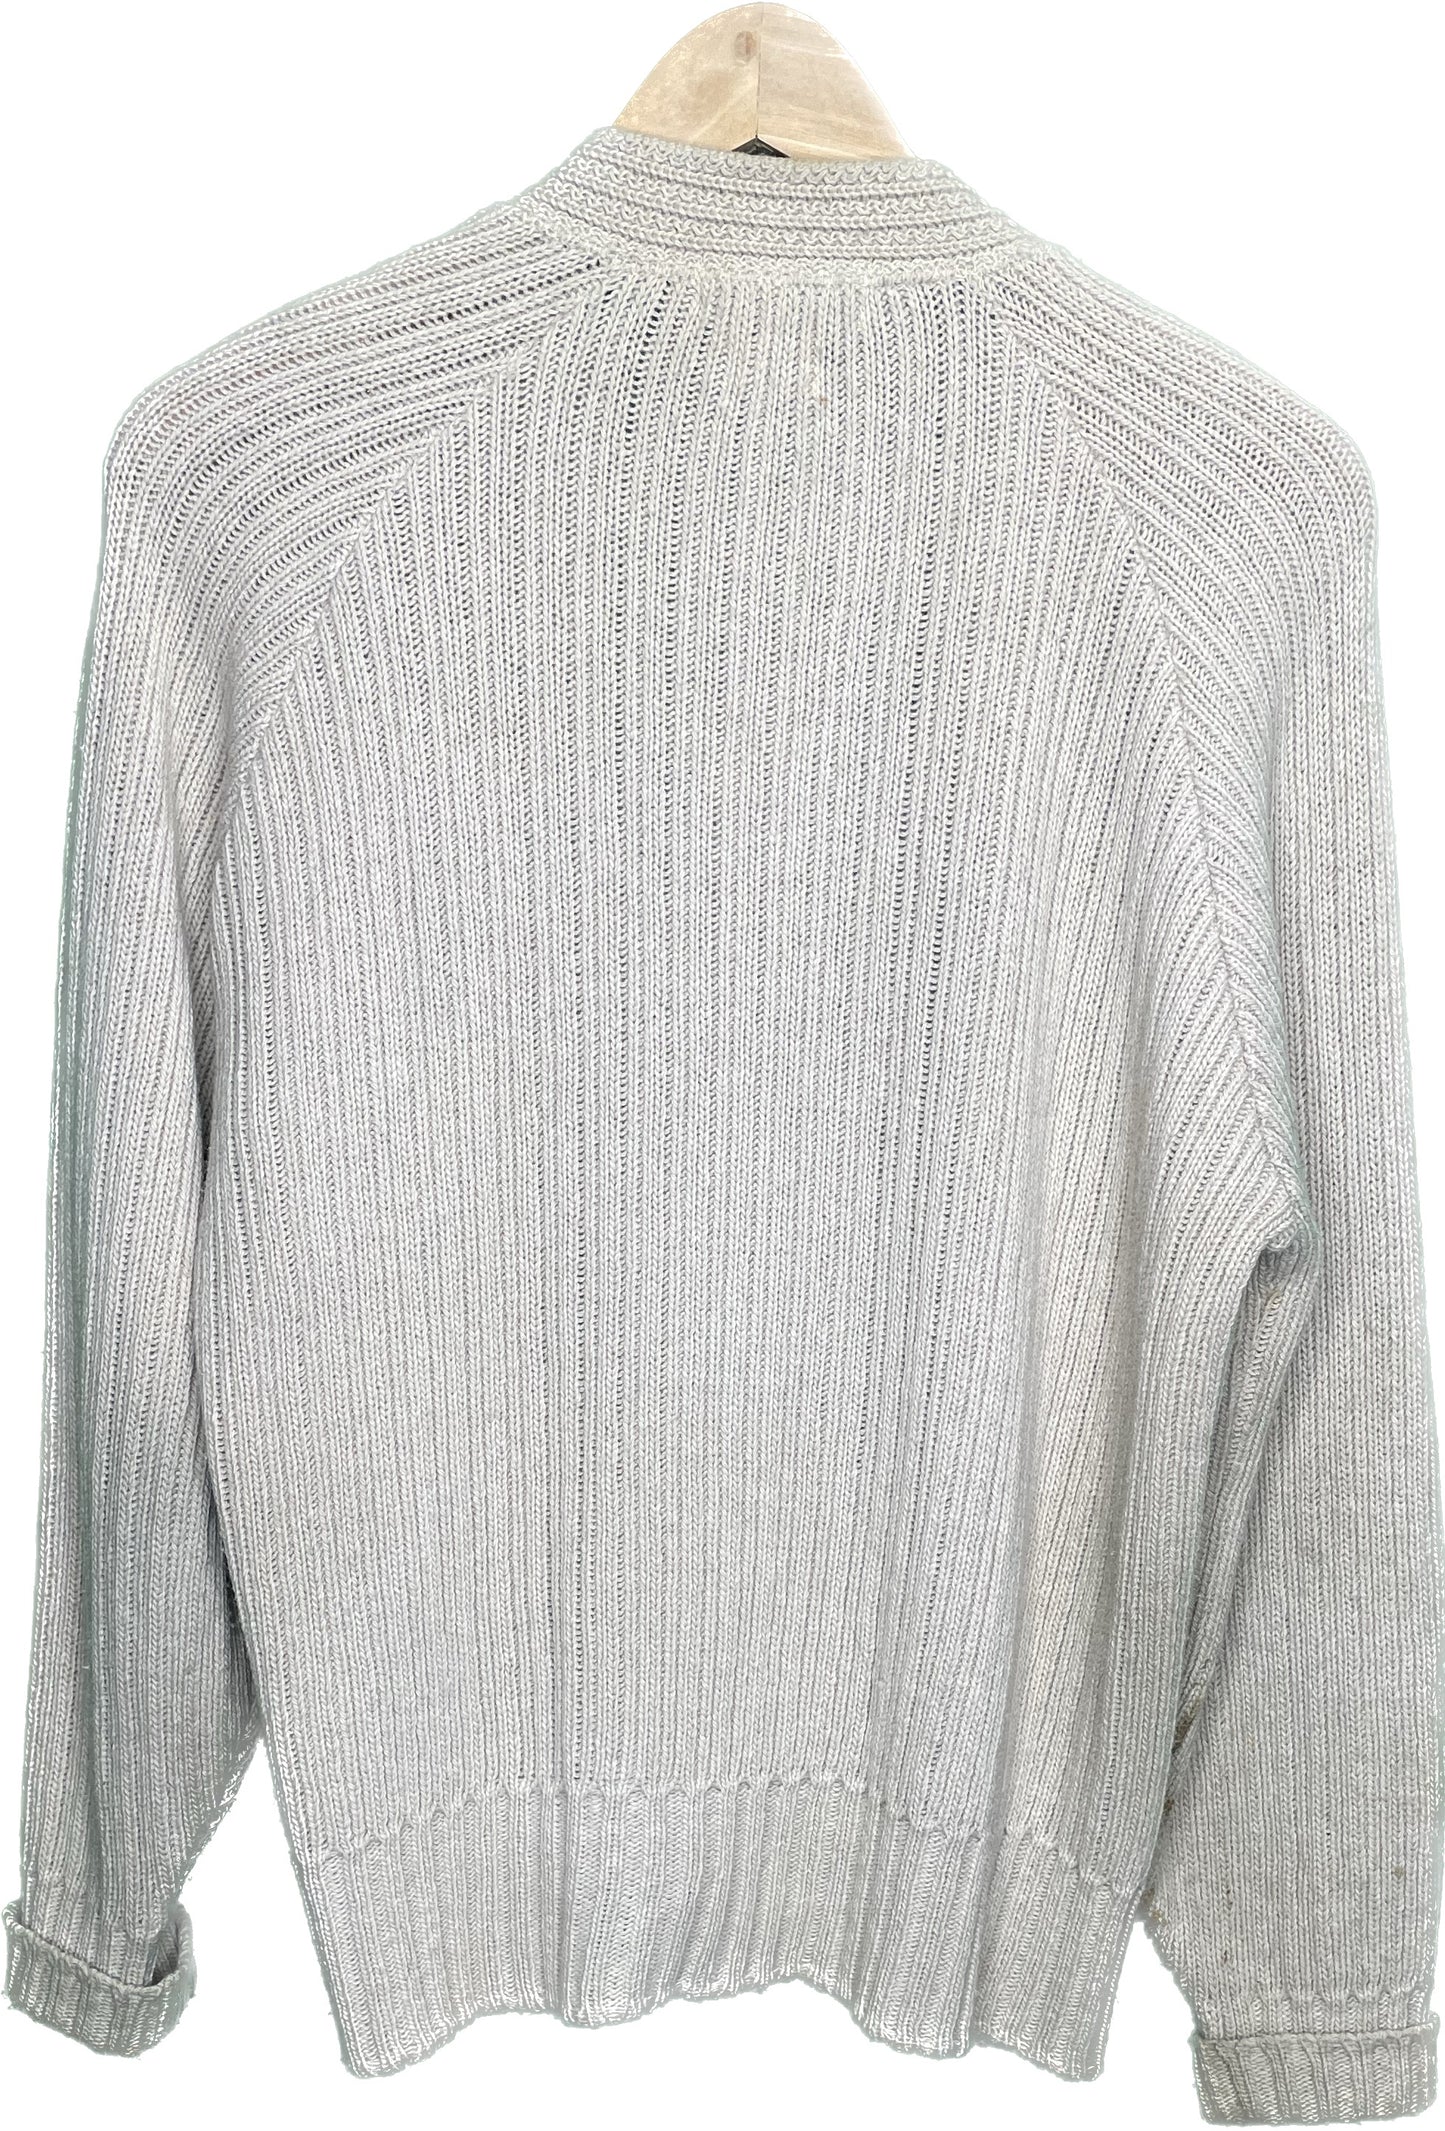 Vintage M Lamb Knit Tan Open Front Sweater